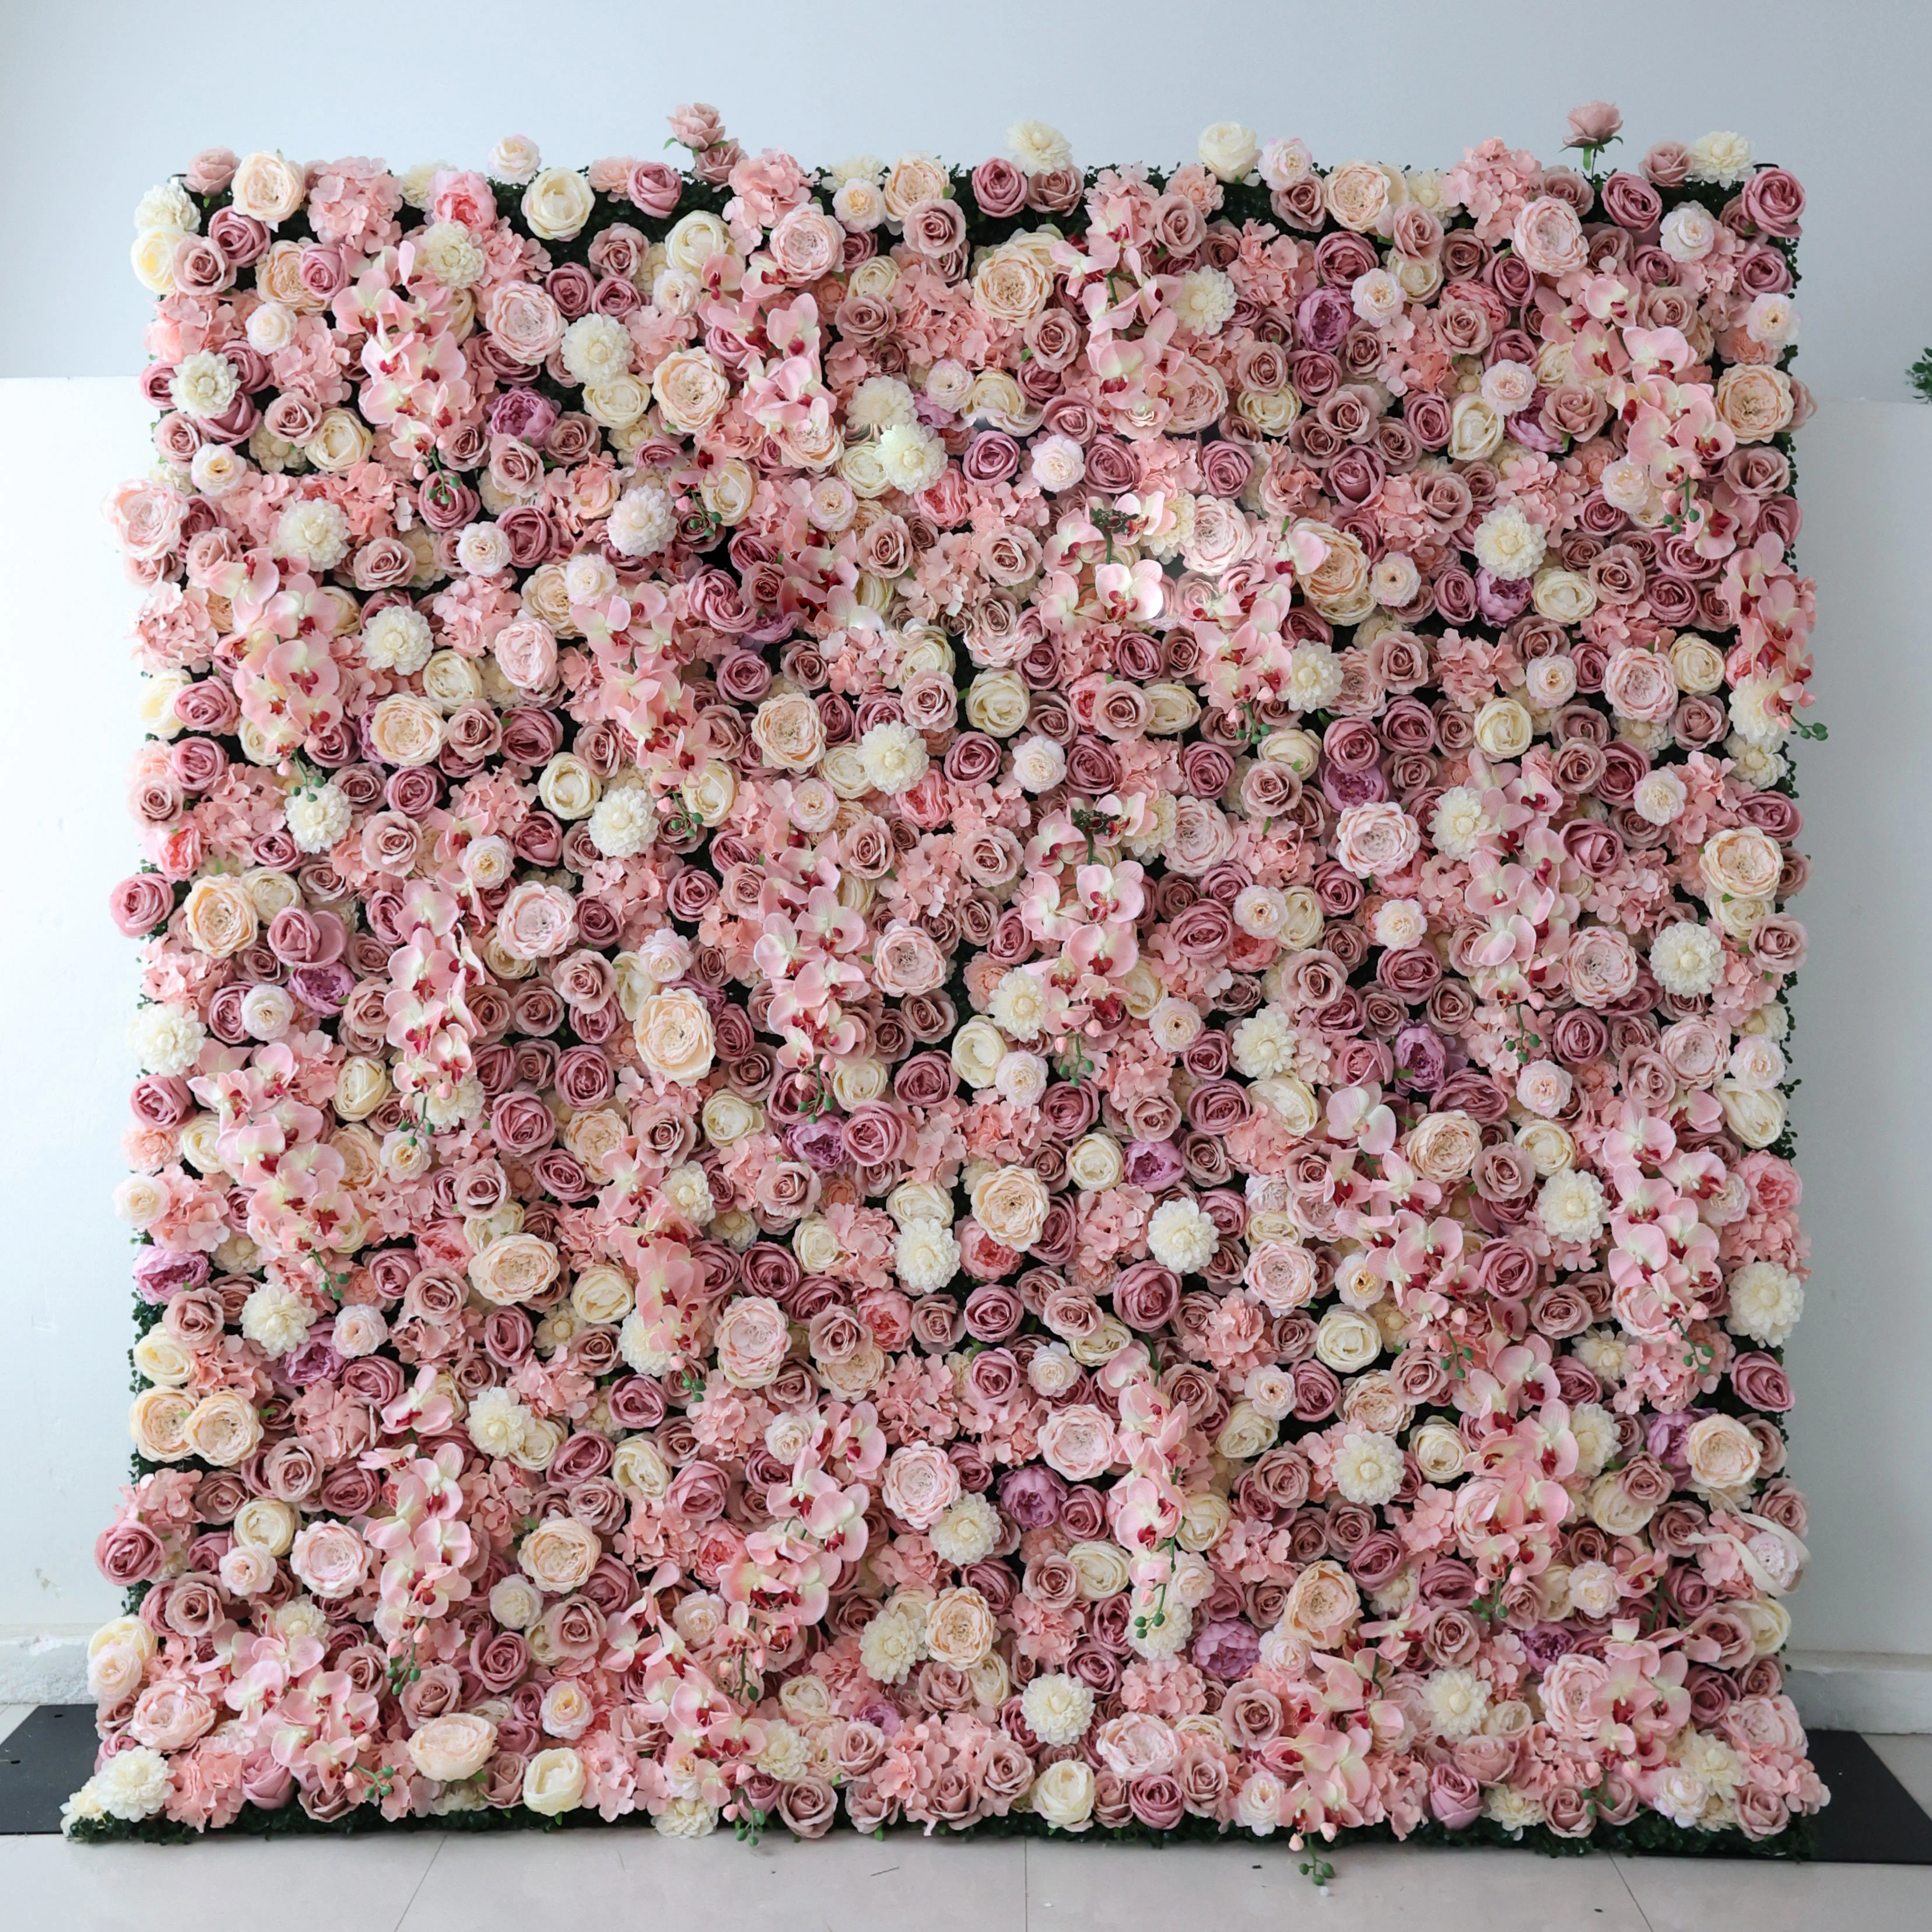 

YL 8ft X 8ft 3D 5D Roll Up Fabric Artificial Silk Rose Flower Wall Wedding Decoration Flower Wall Backdrop Panel